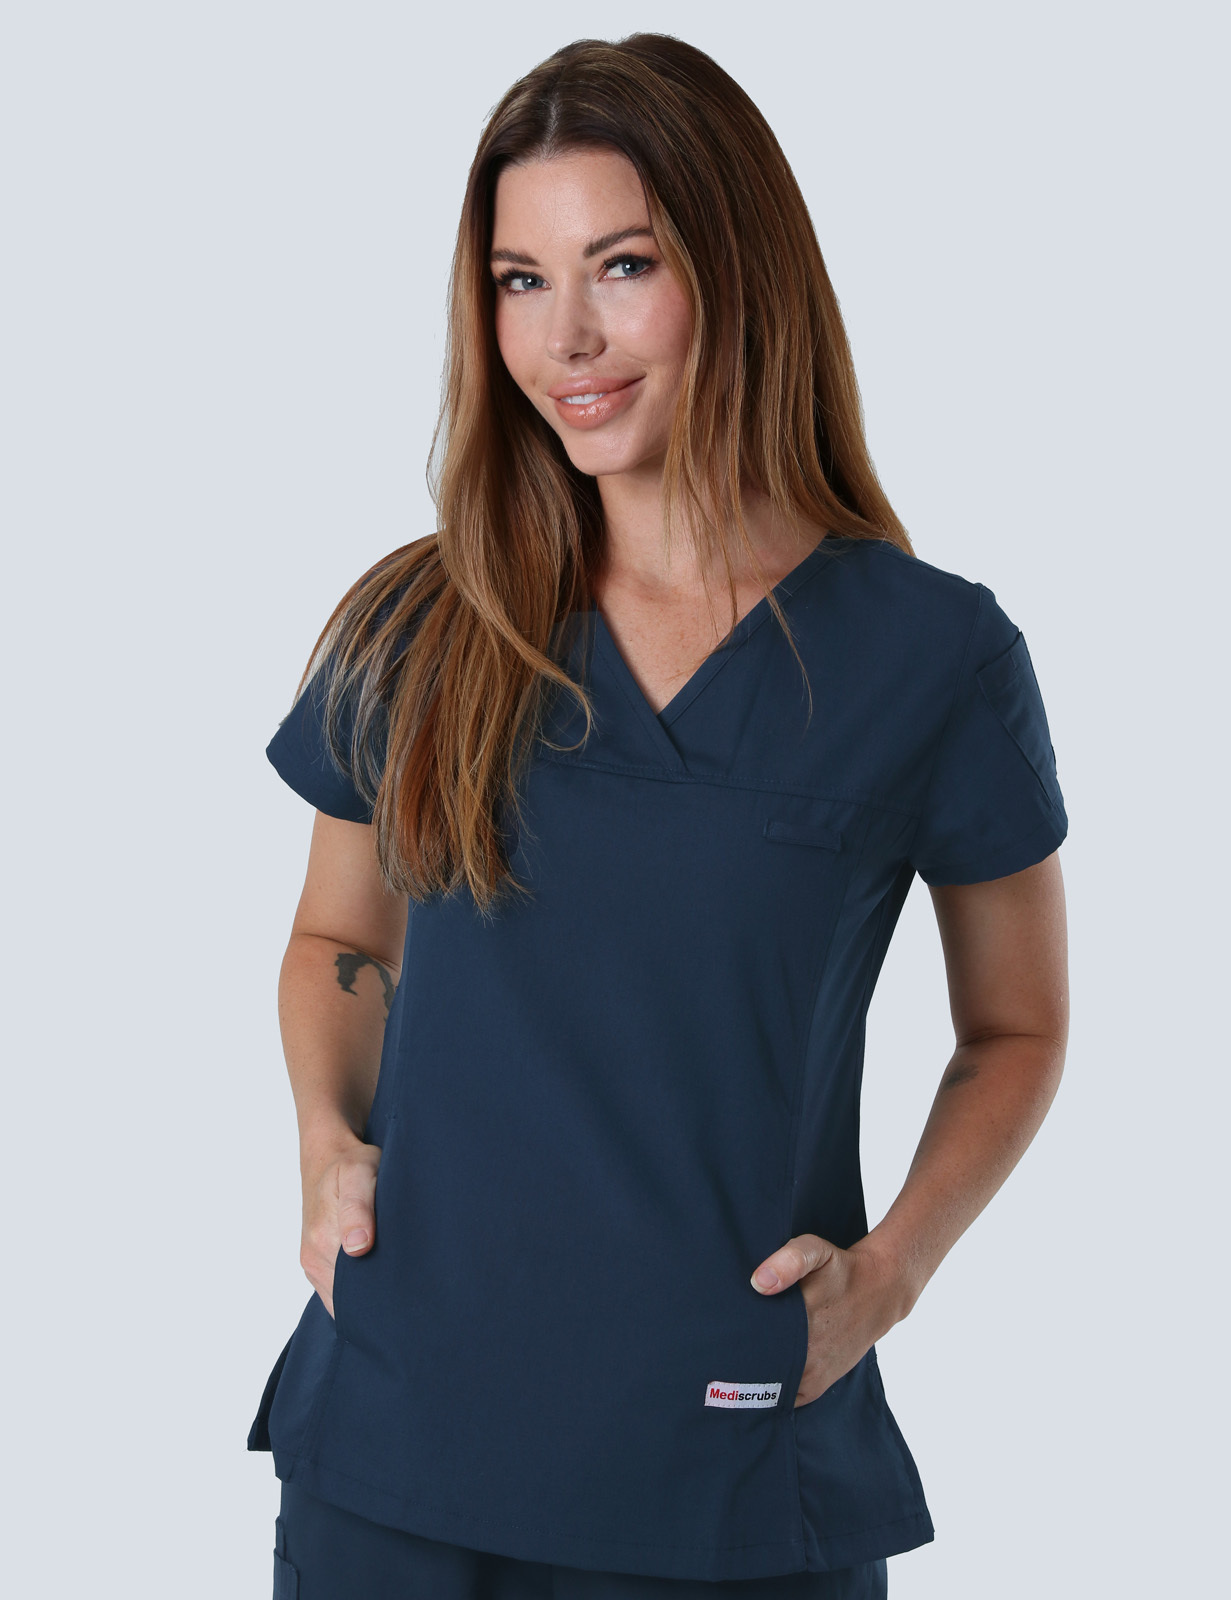 Monash Health Newborn Nurse Practitioner Uniform Set Bundle (Women's Fit Solid Top and Cargo Pants in Navy + Logo)